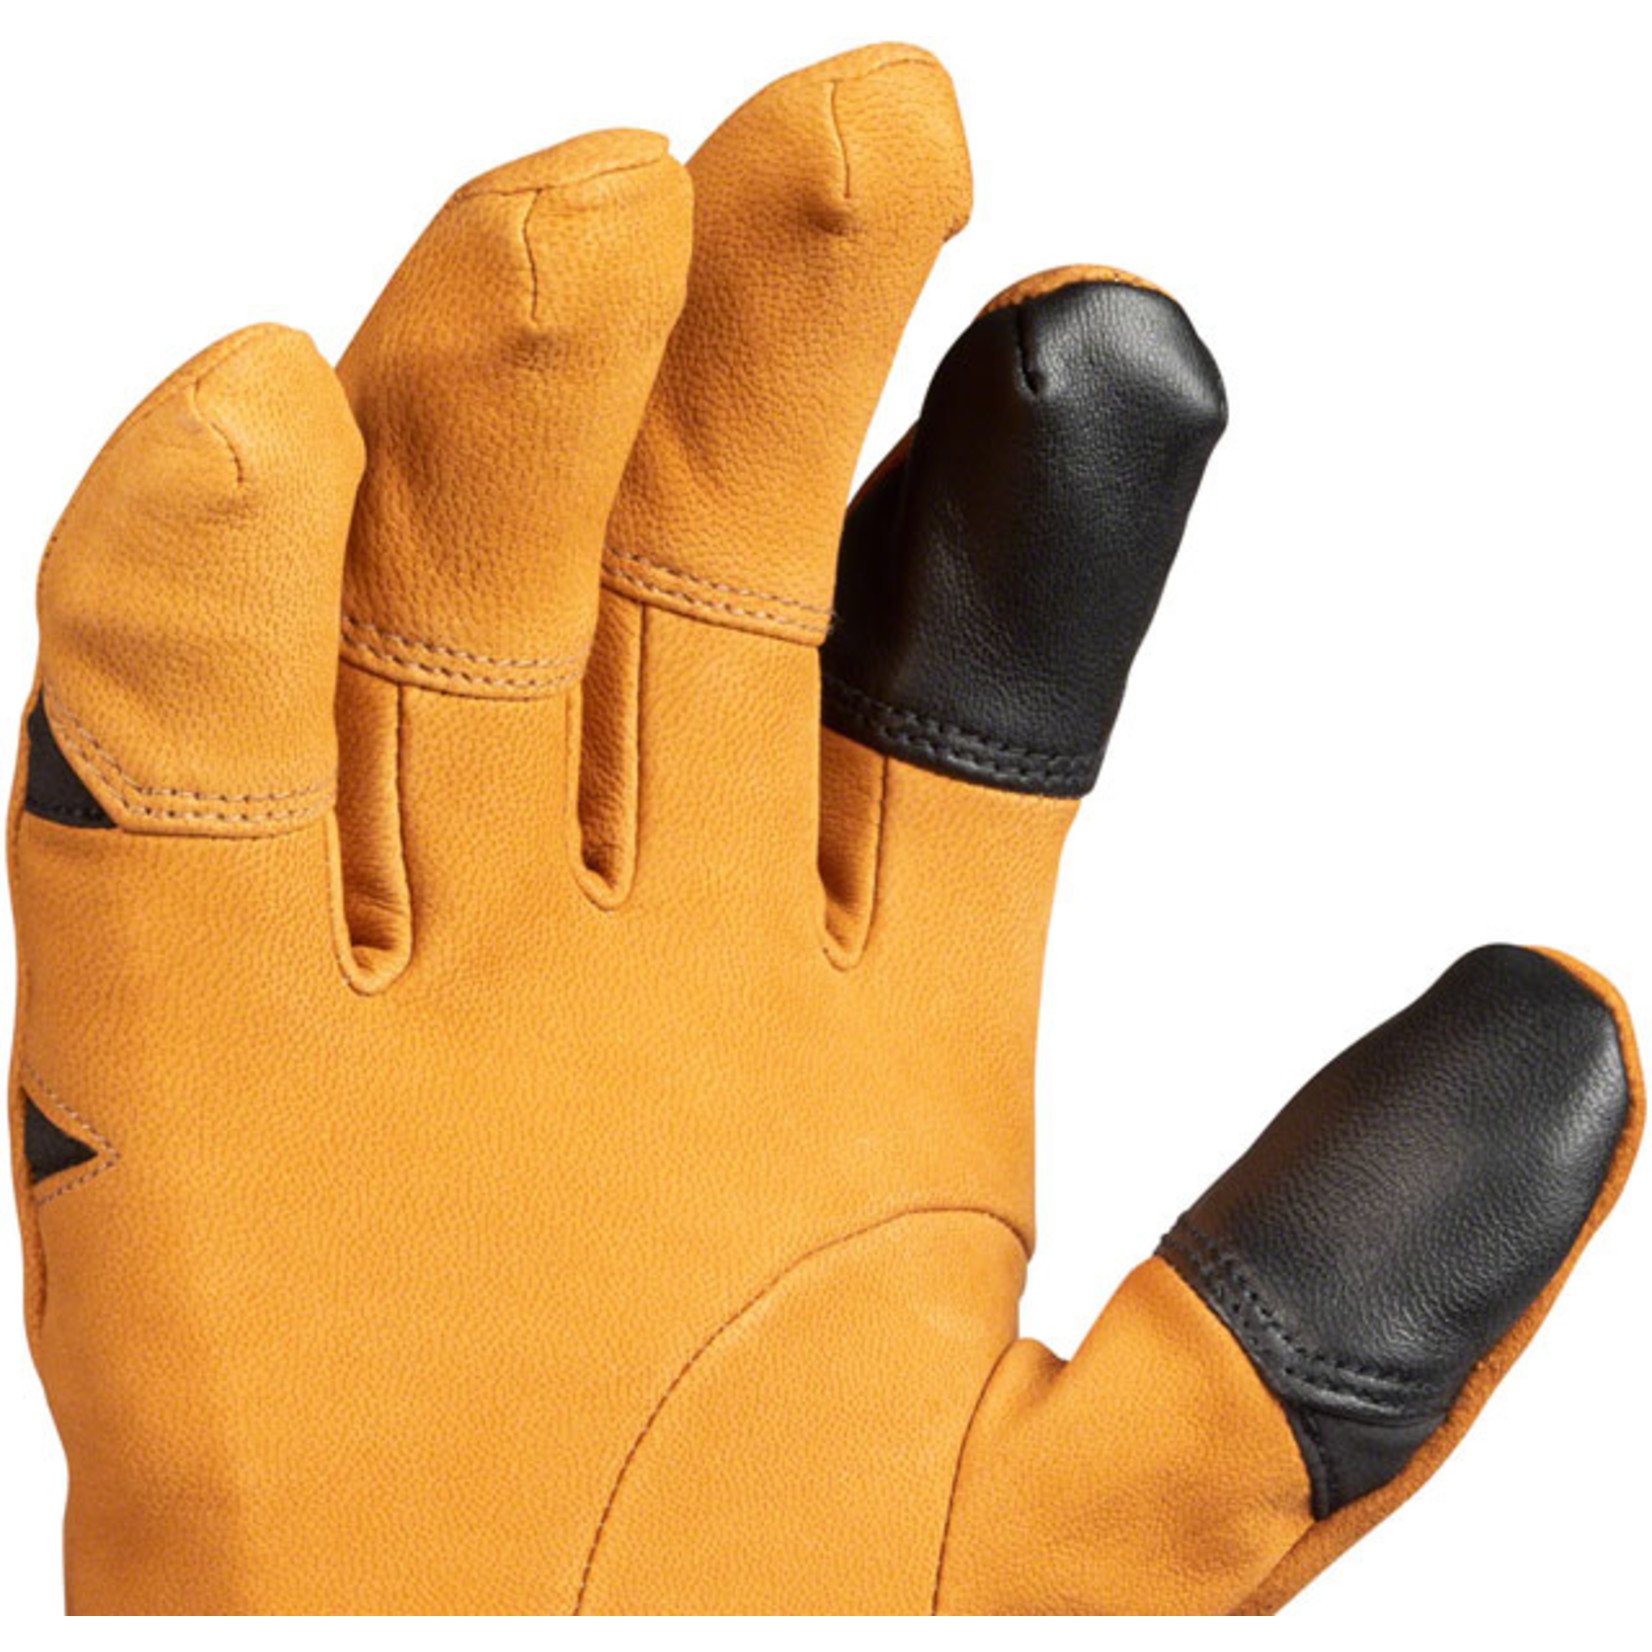 45NRTH Sturmfist 5 LTR Leather Glove - Tan/Black Full Finger Large